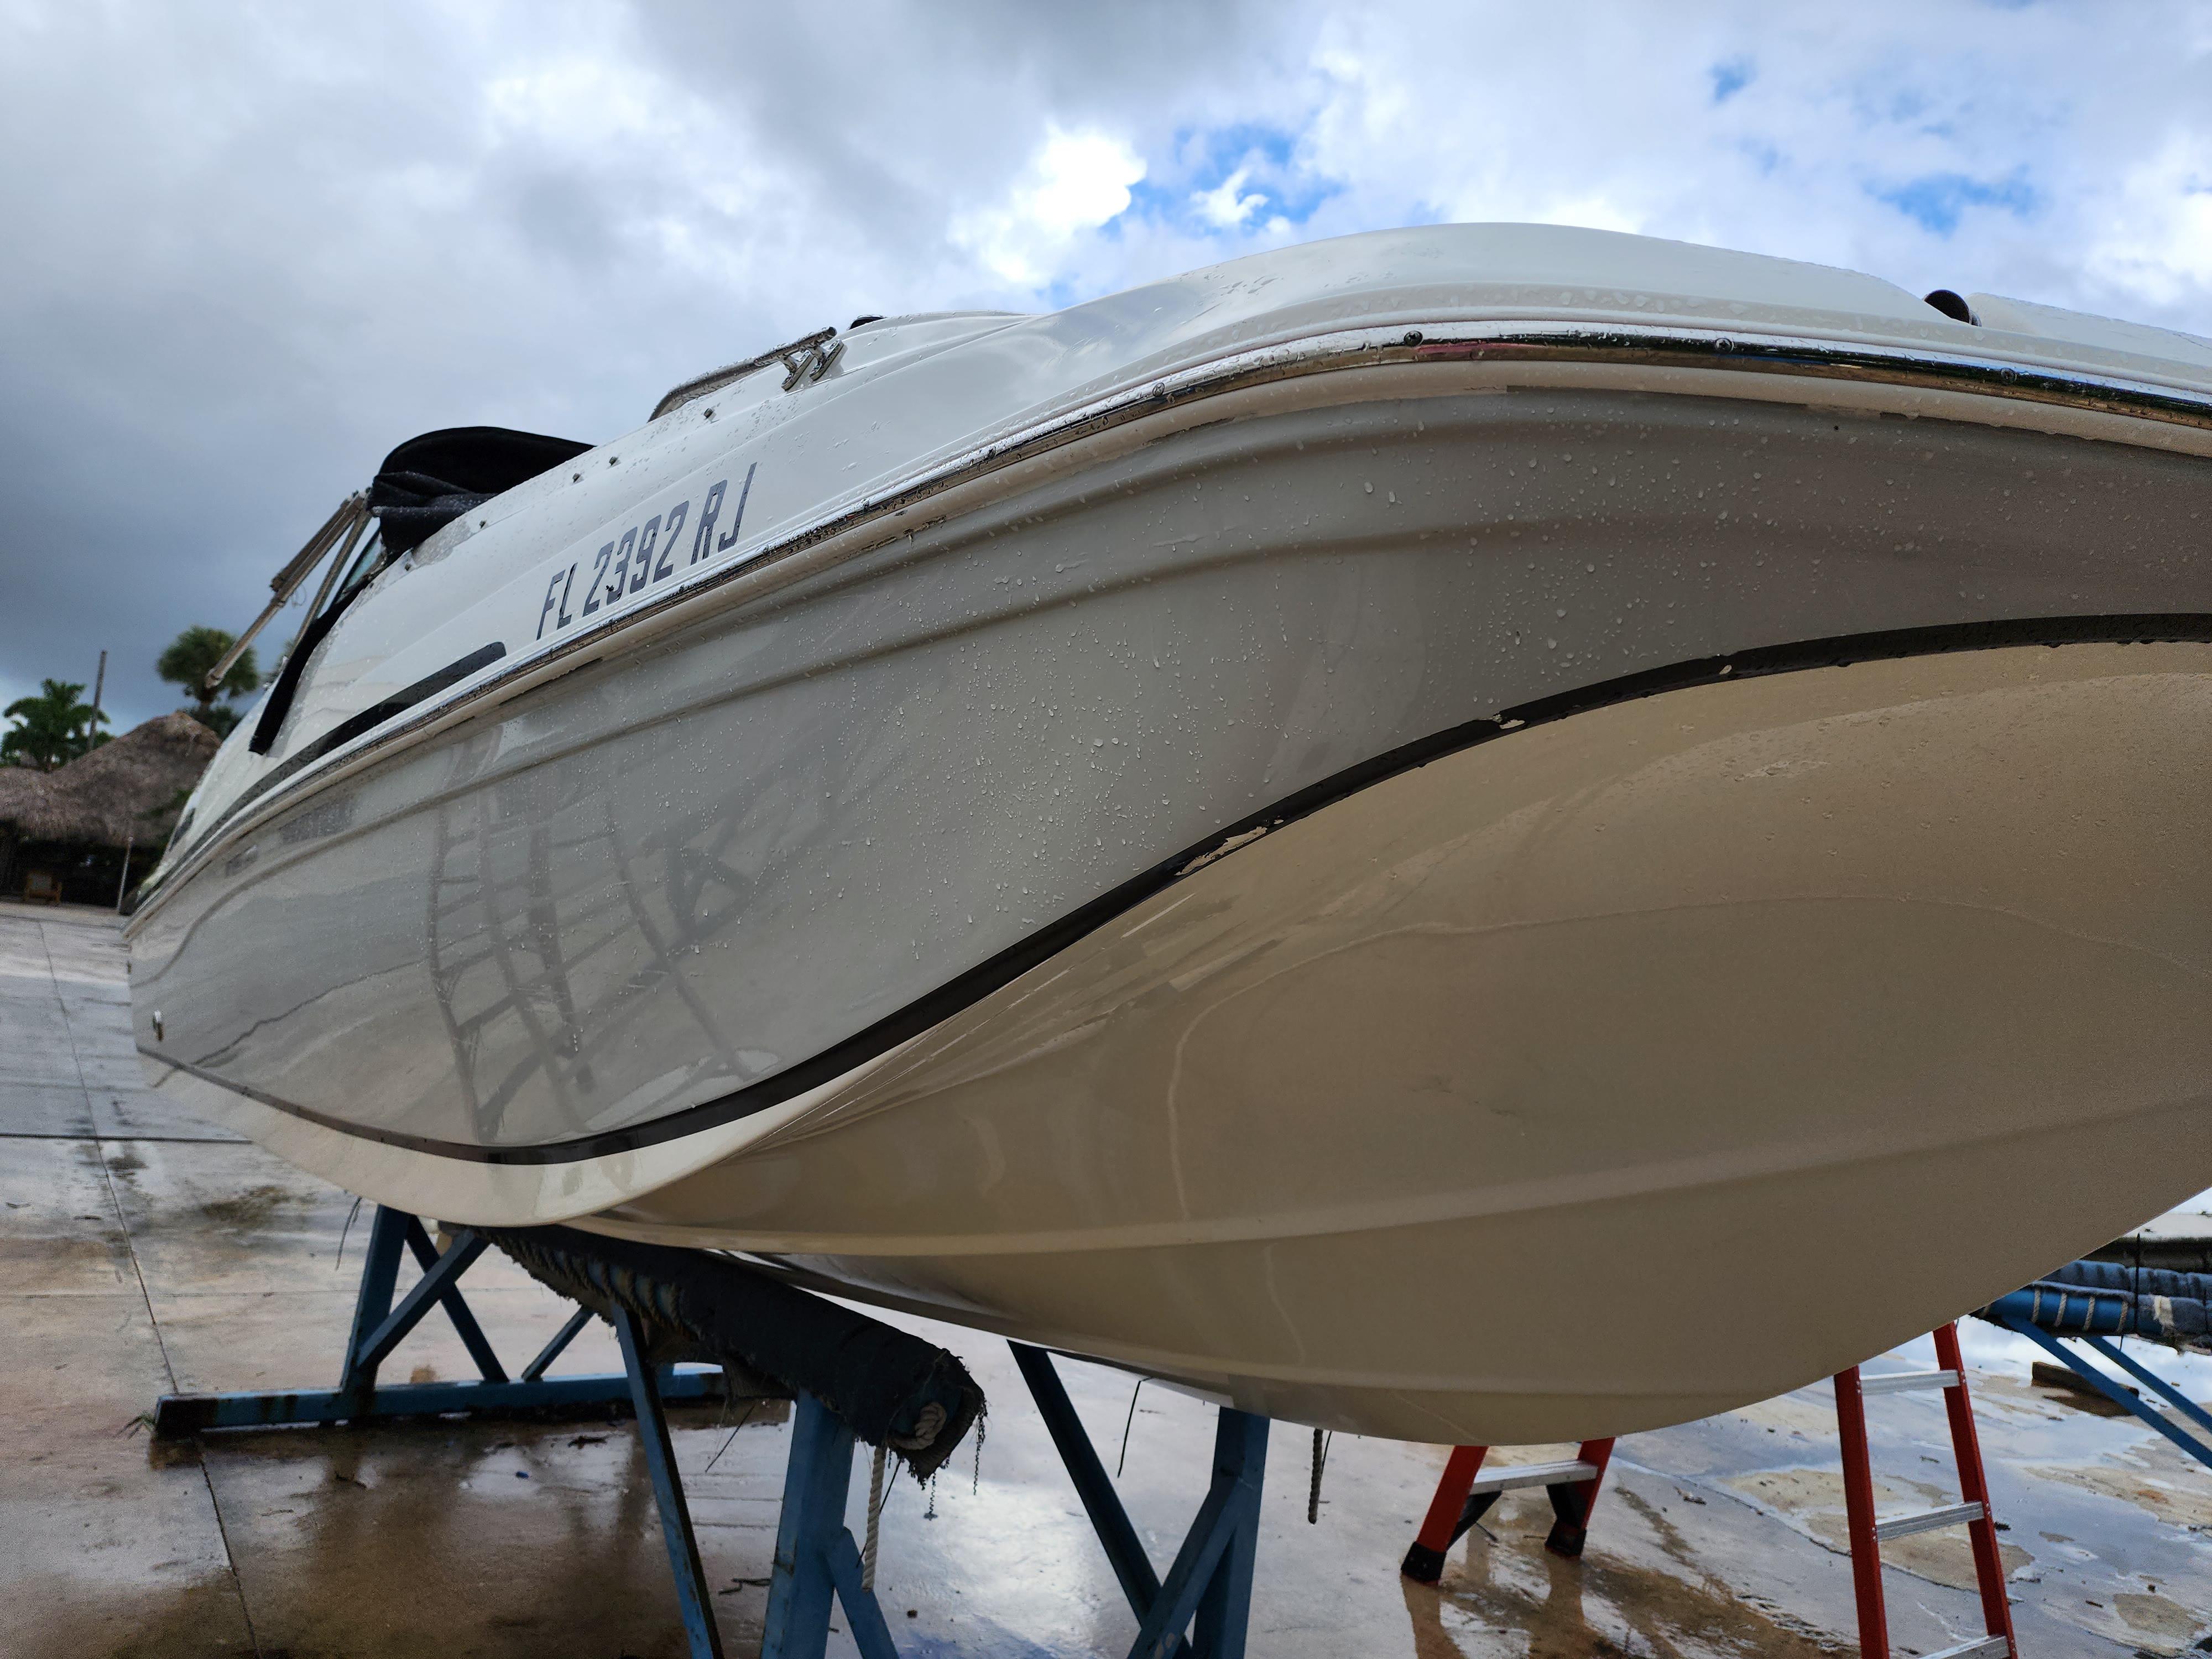 2016 Hurricane SunDeck 187 OB Deck for sale - YachtWorld